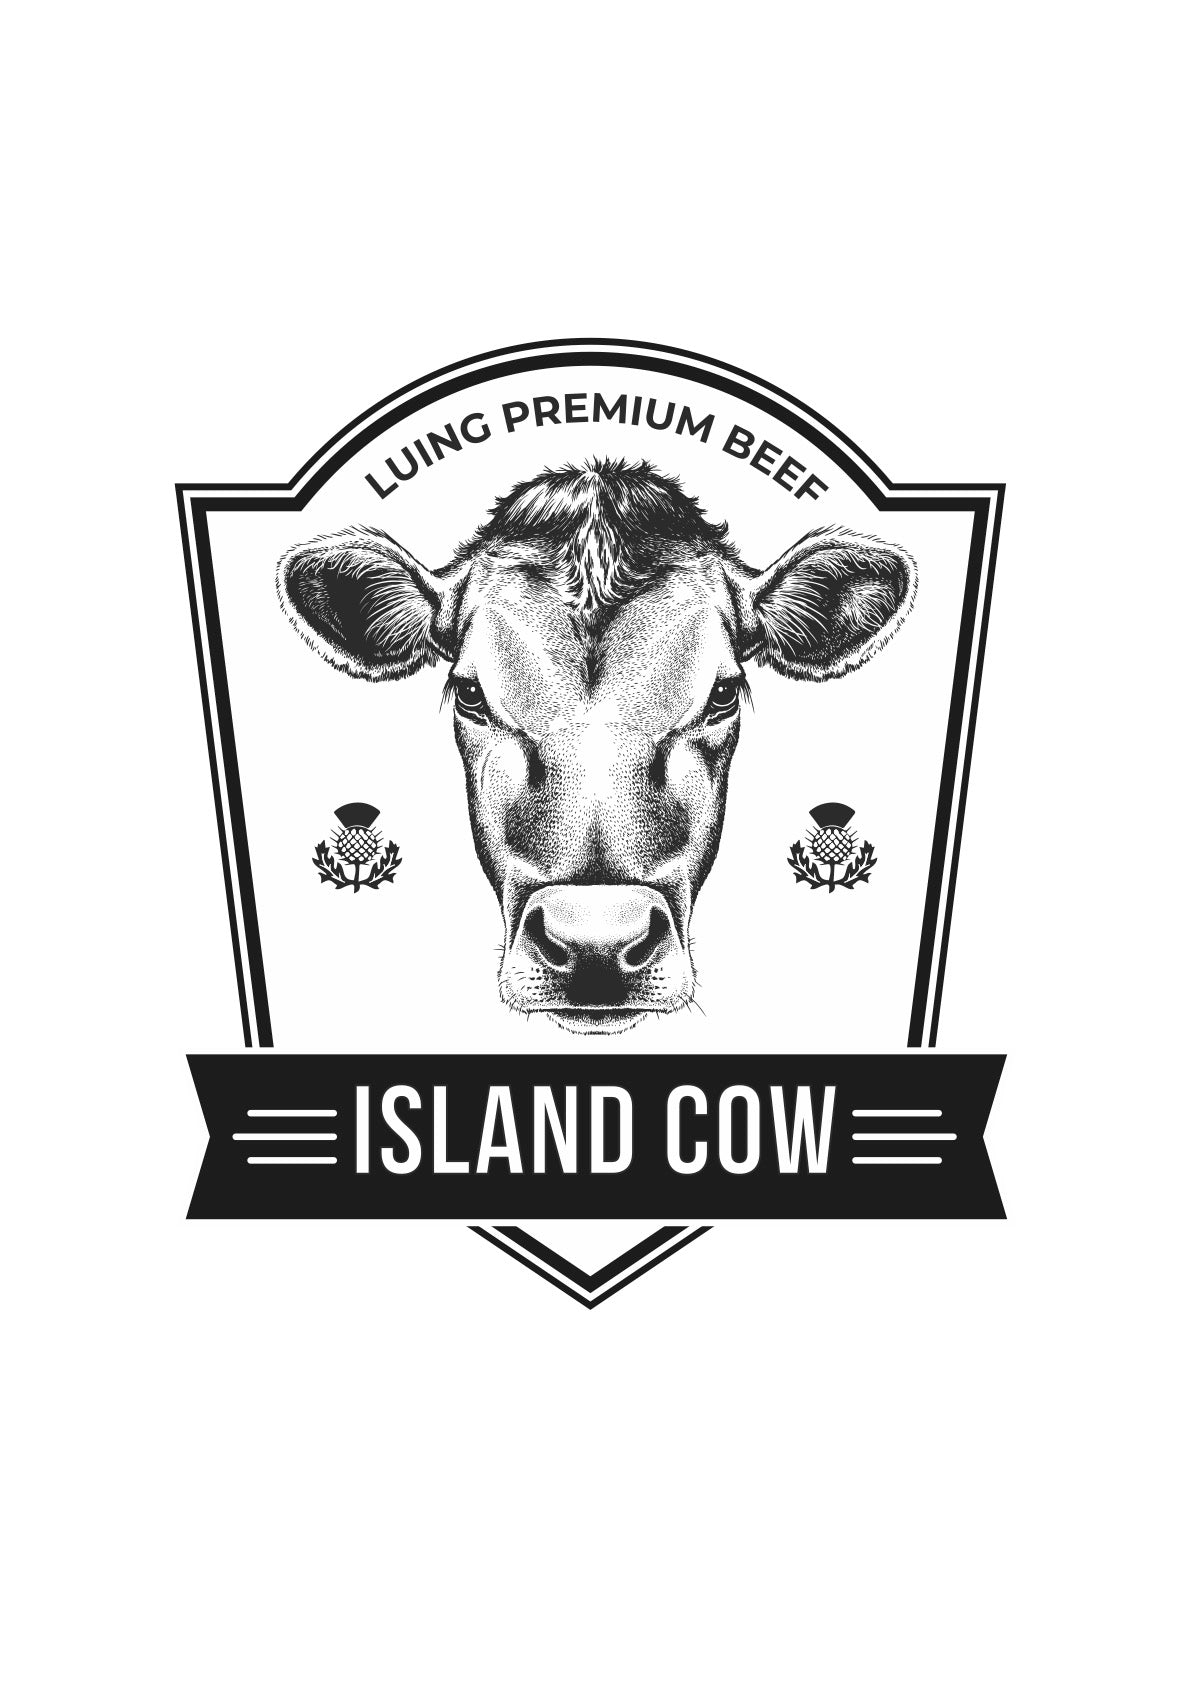 Ribeye Island Cow - Luing Premium Beef